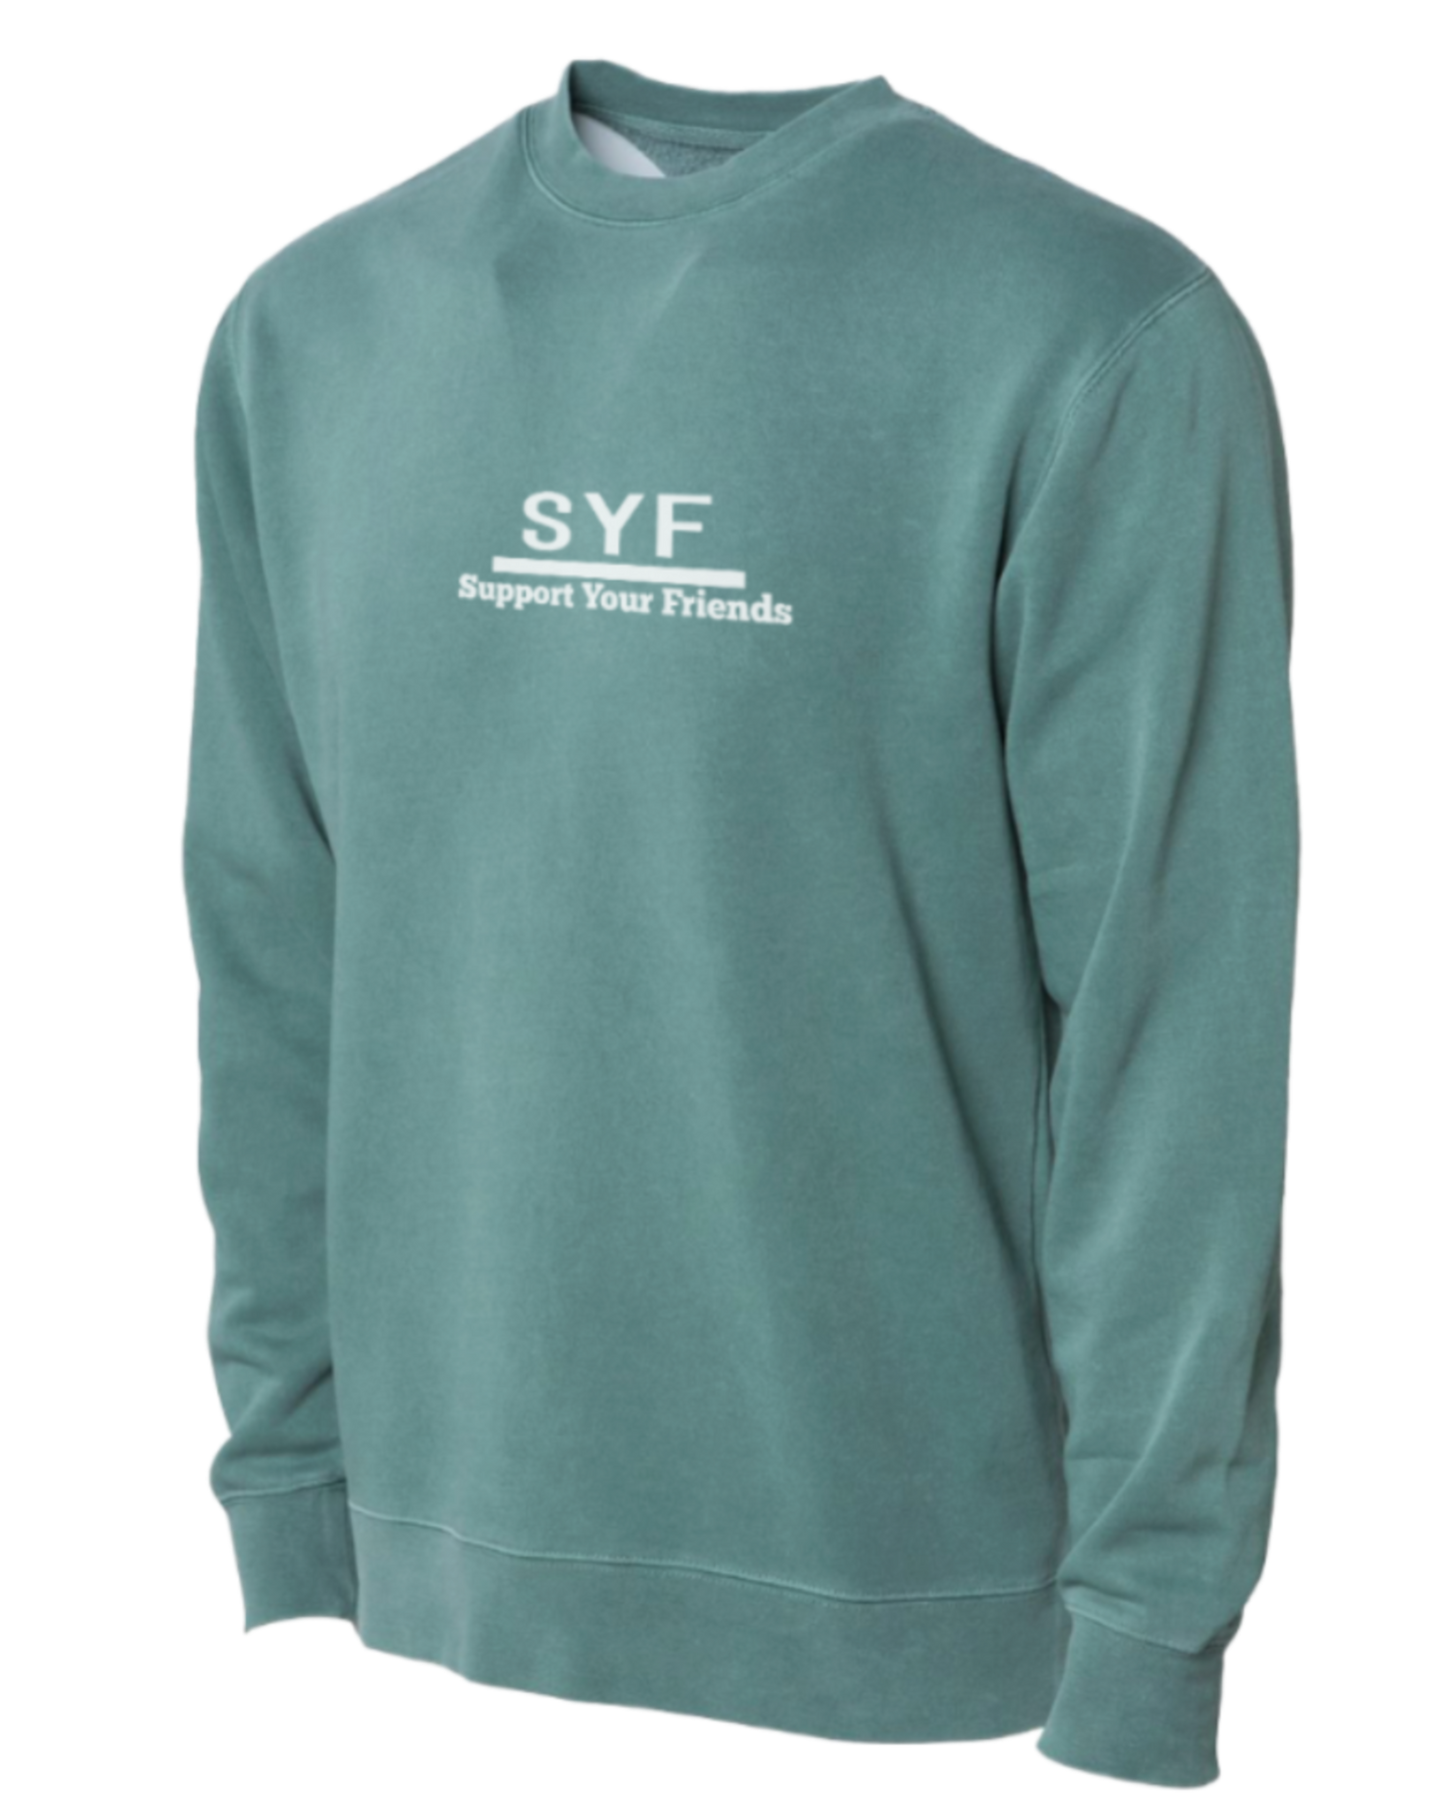 SYF Alpine Green Crewneck Sweater